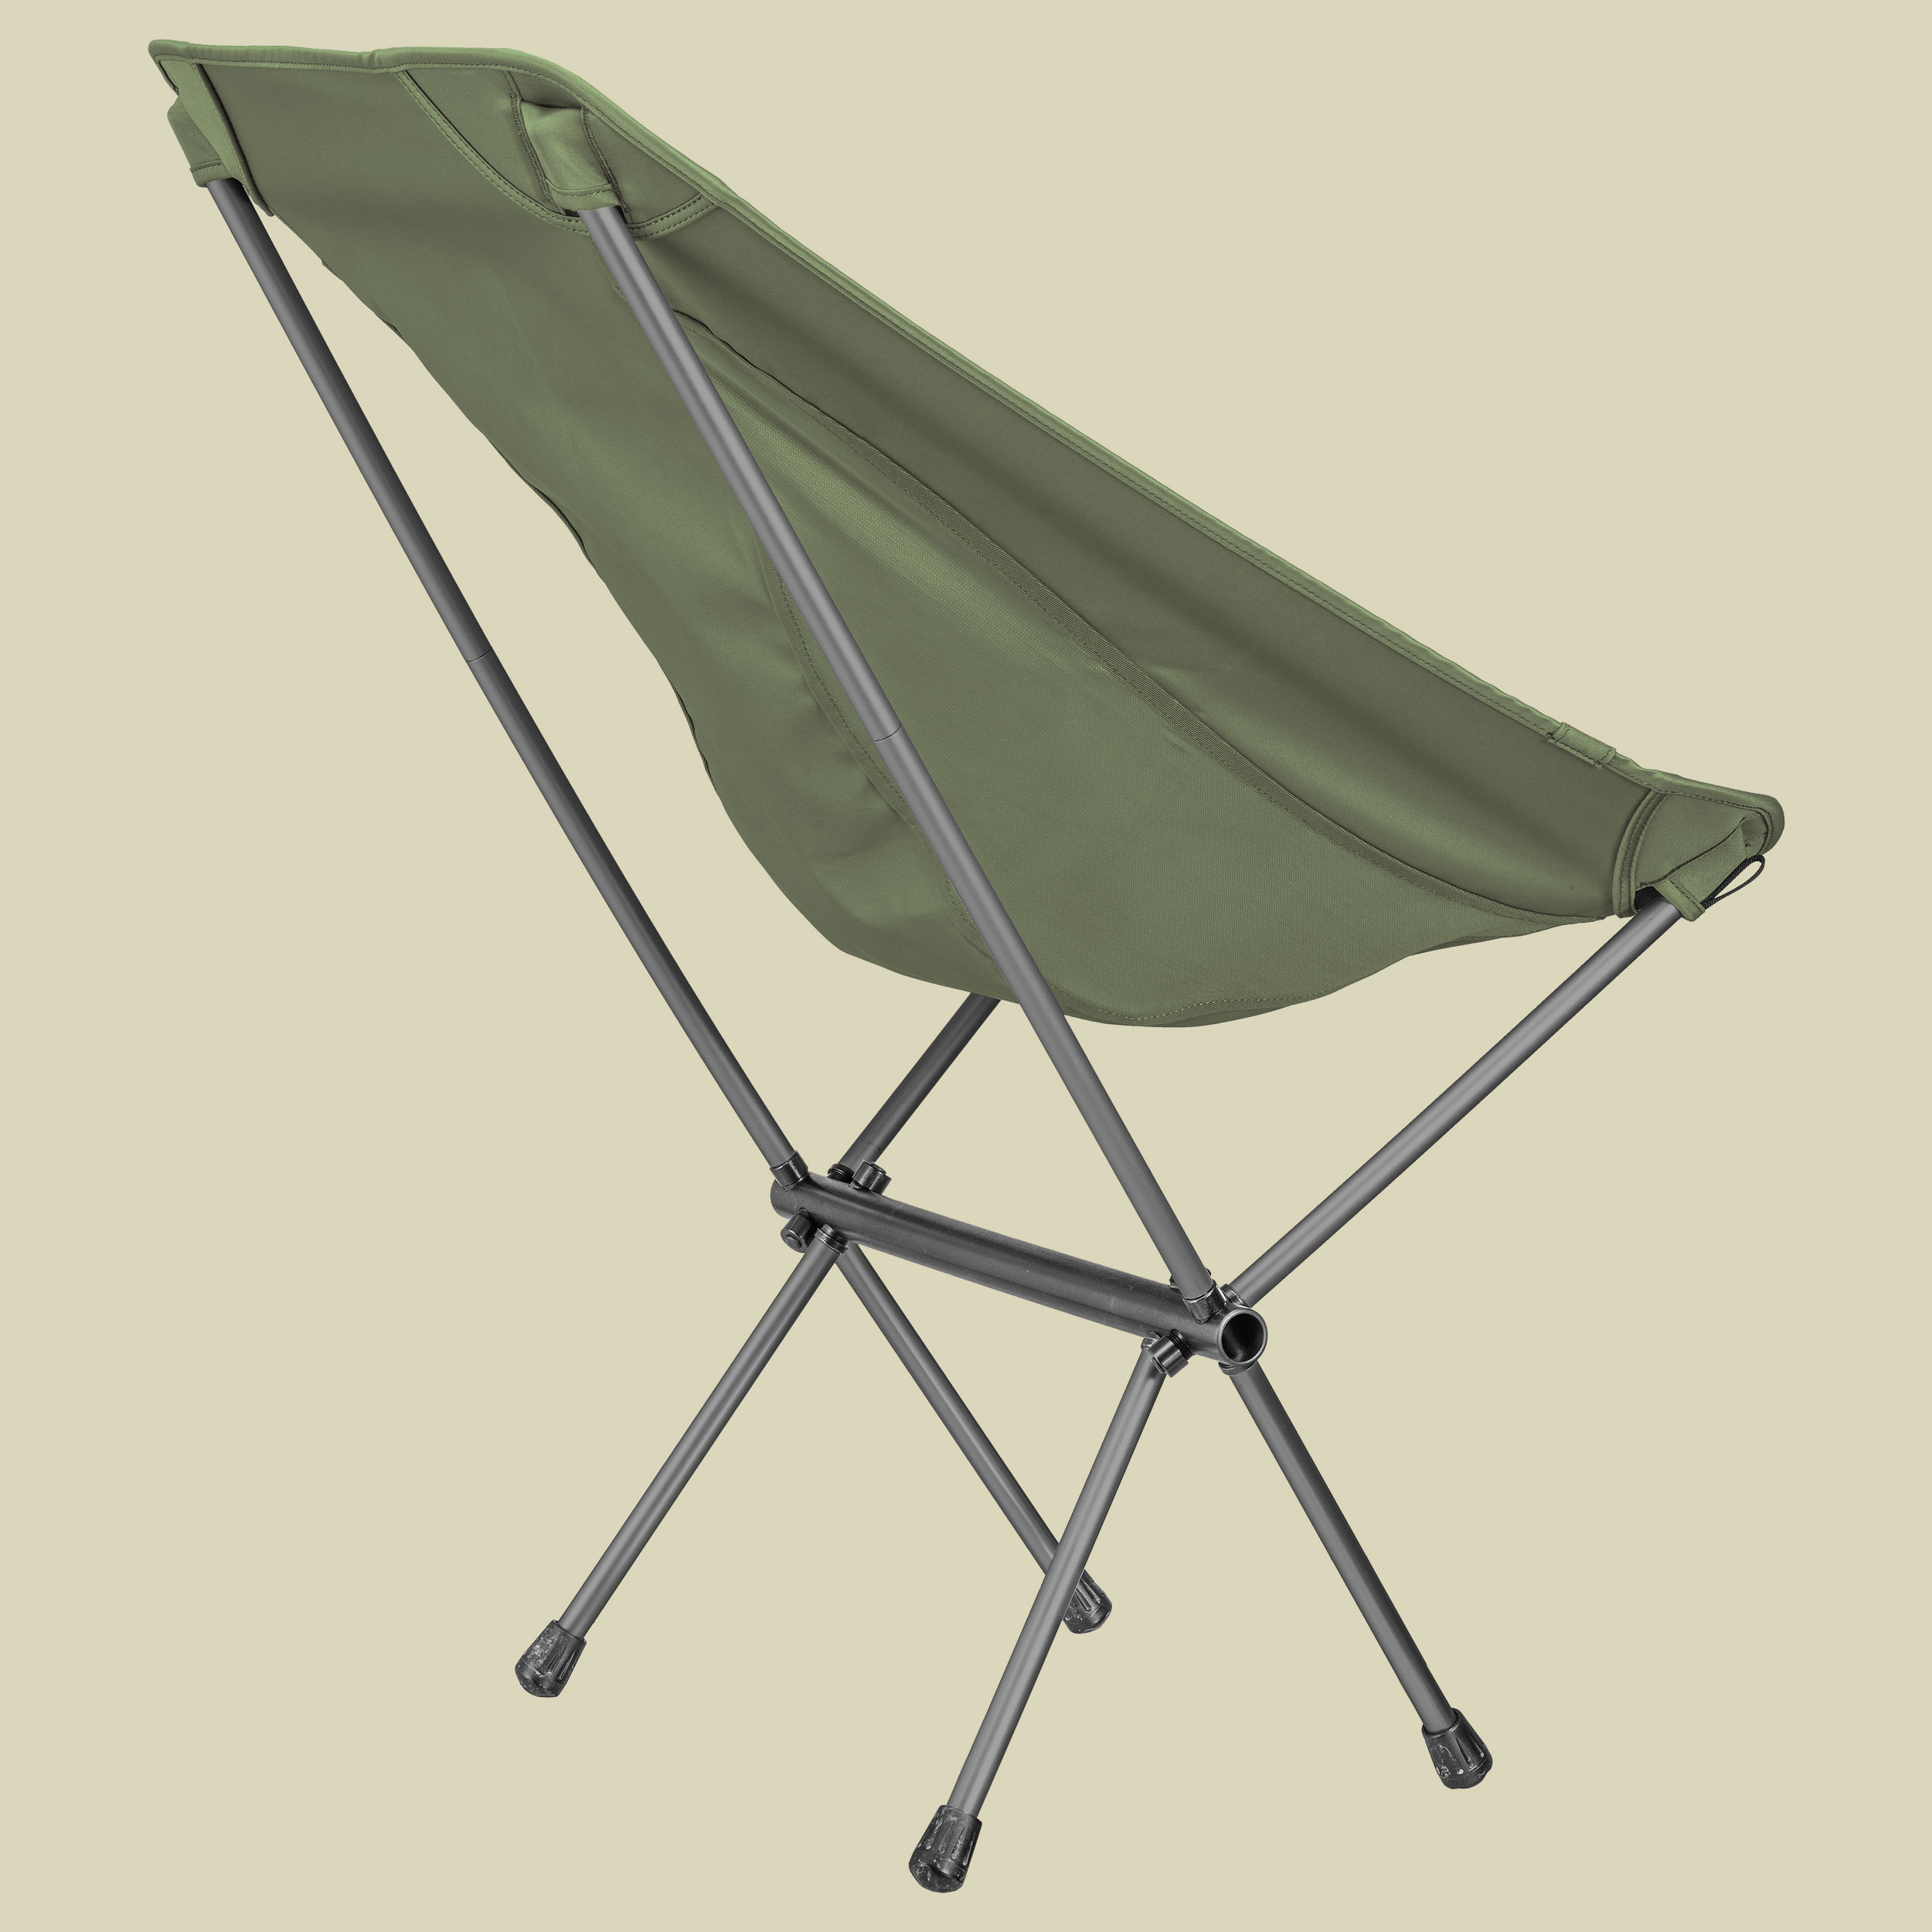 Chair Kiwi Größe one size Farbe chive green